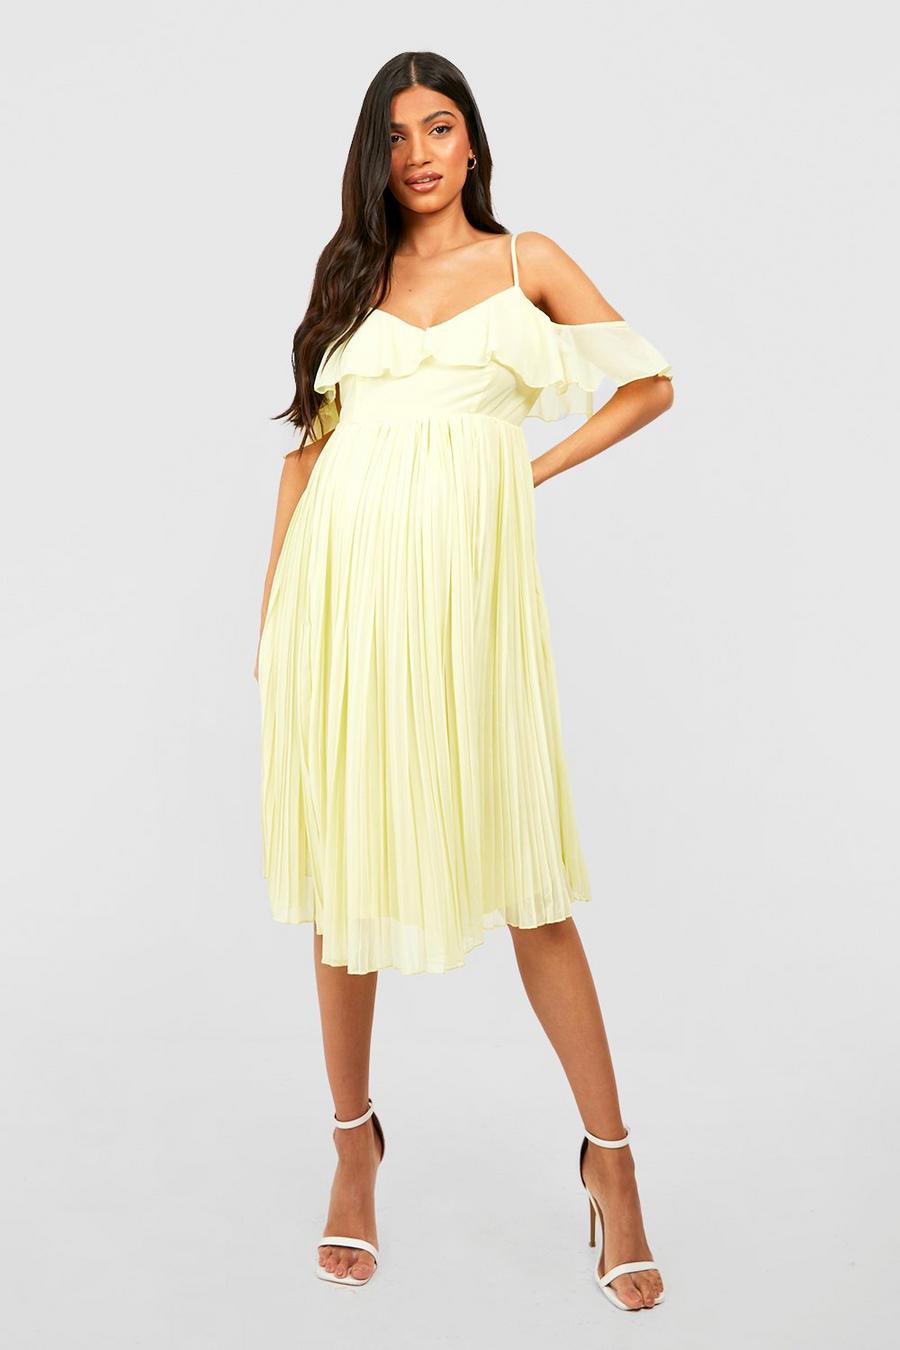 Lemon yellow Maternity Occasion Cold Shoulder Dress